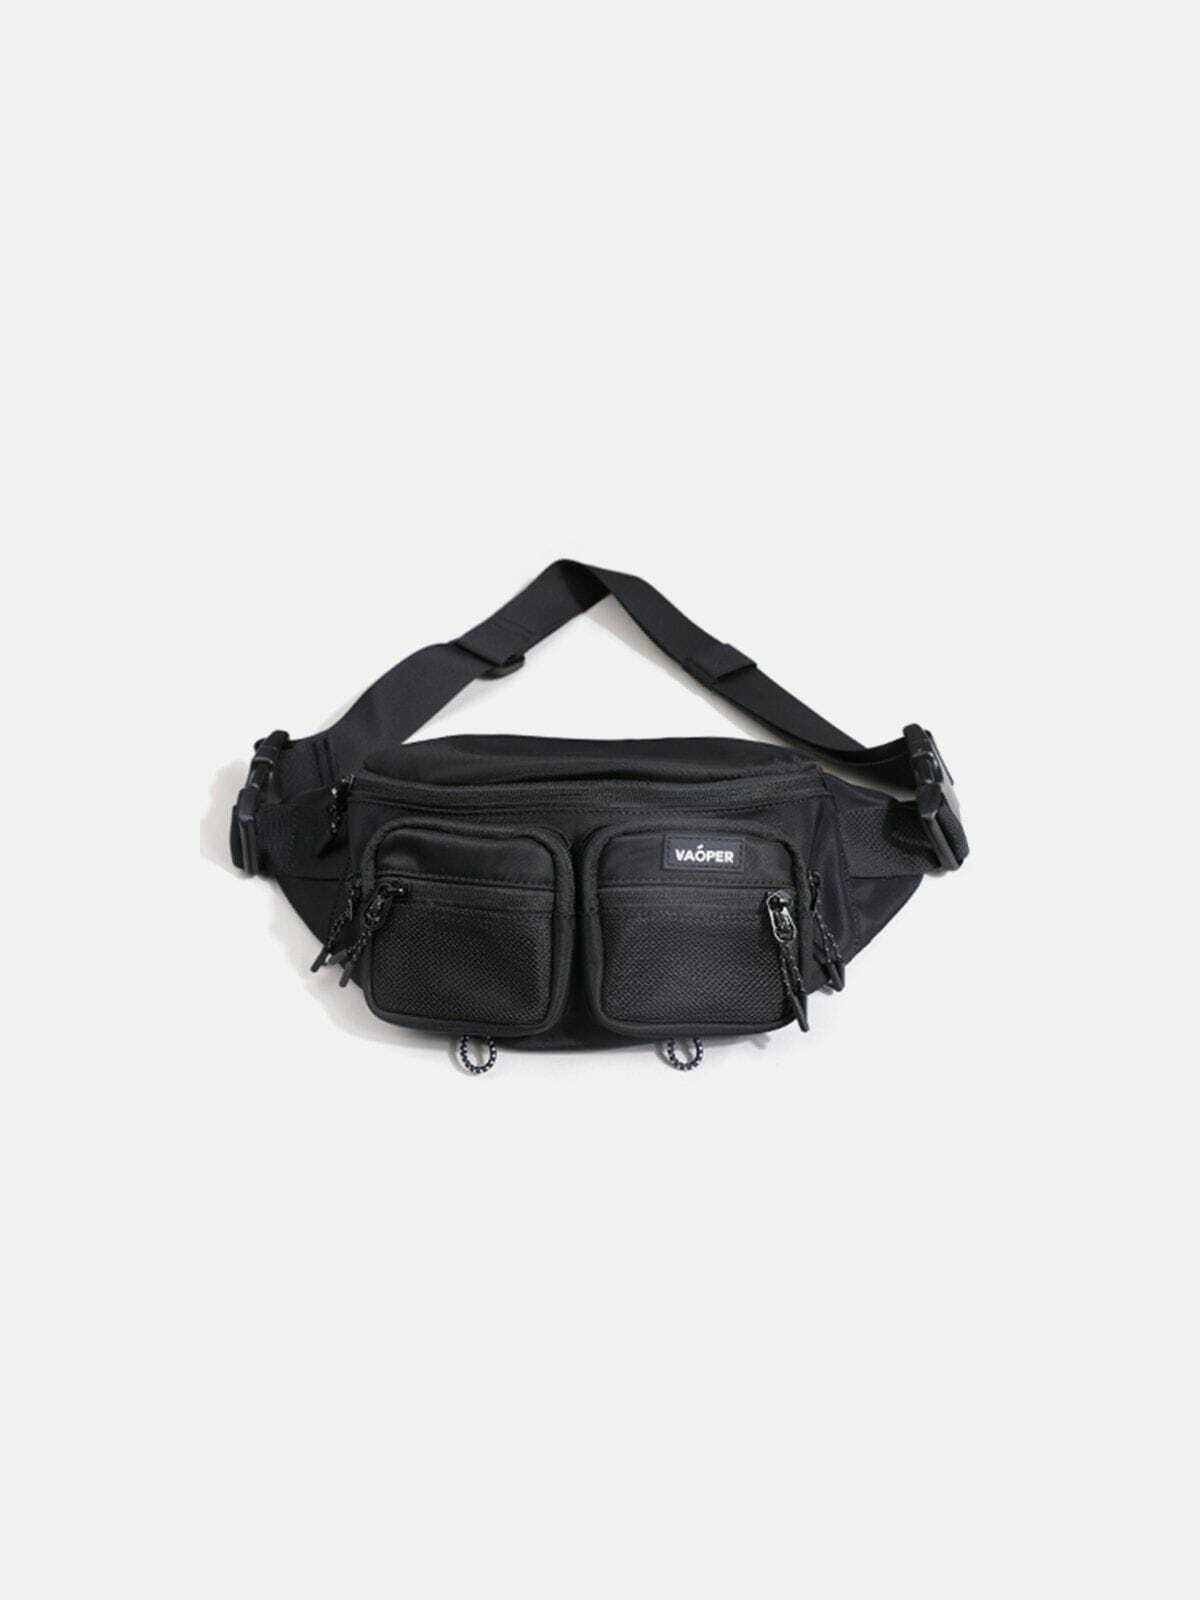 functional crossbody bag chic & edgy streetwear accessory 8611